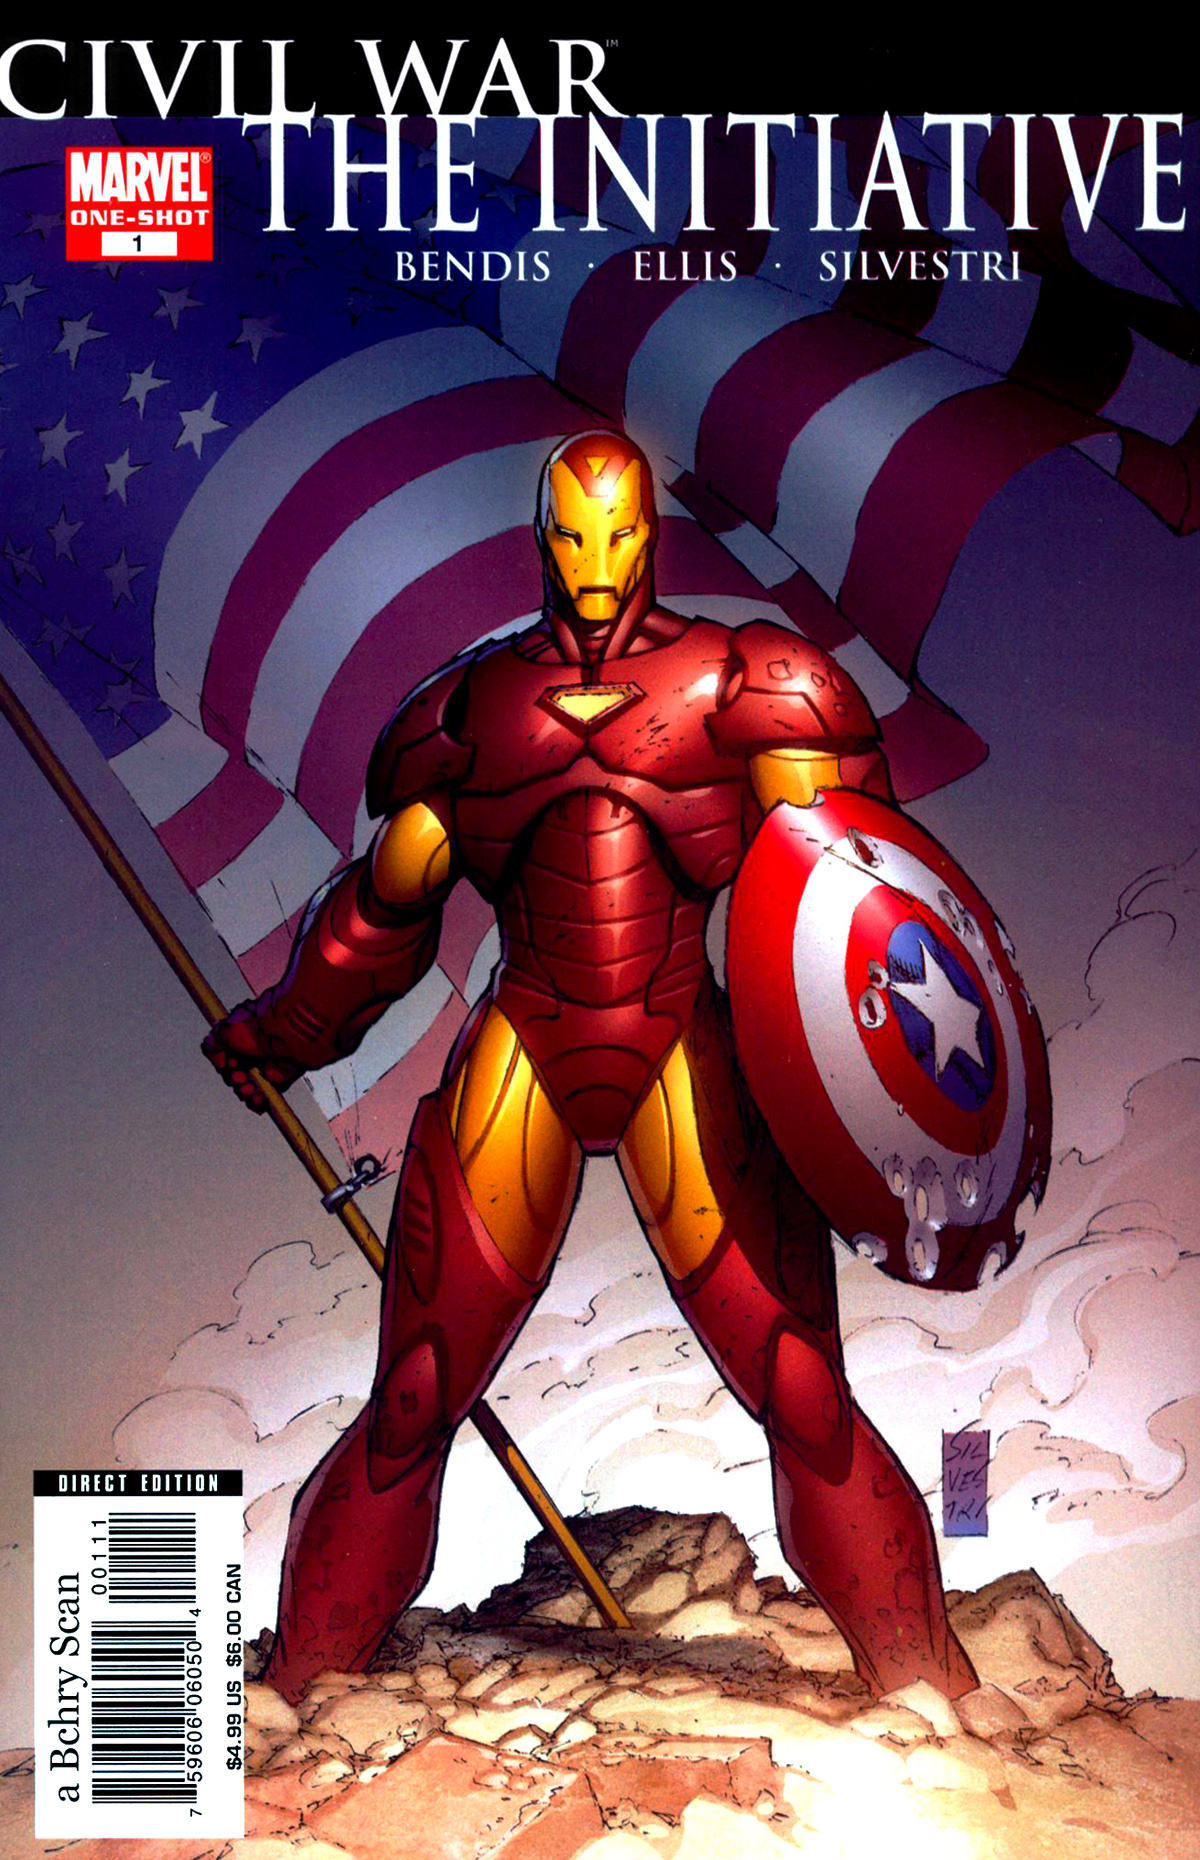 Read online Civil War: The Initiative comic -  Issue # Full - 1